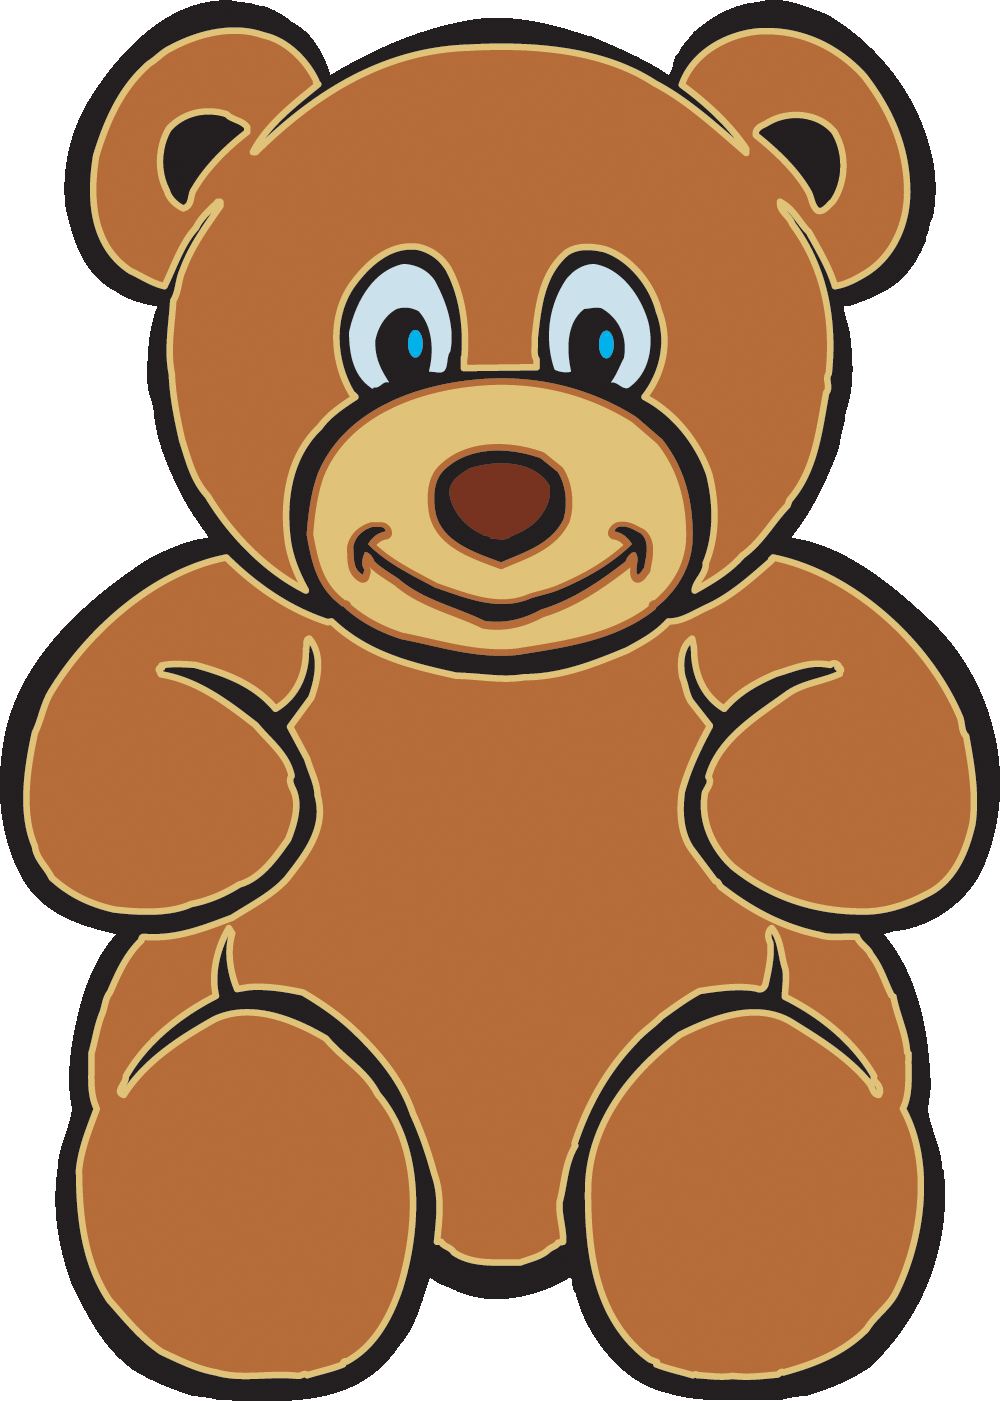 Big Cute Teddy Bears Free Cli - Teddy Bears Clipart